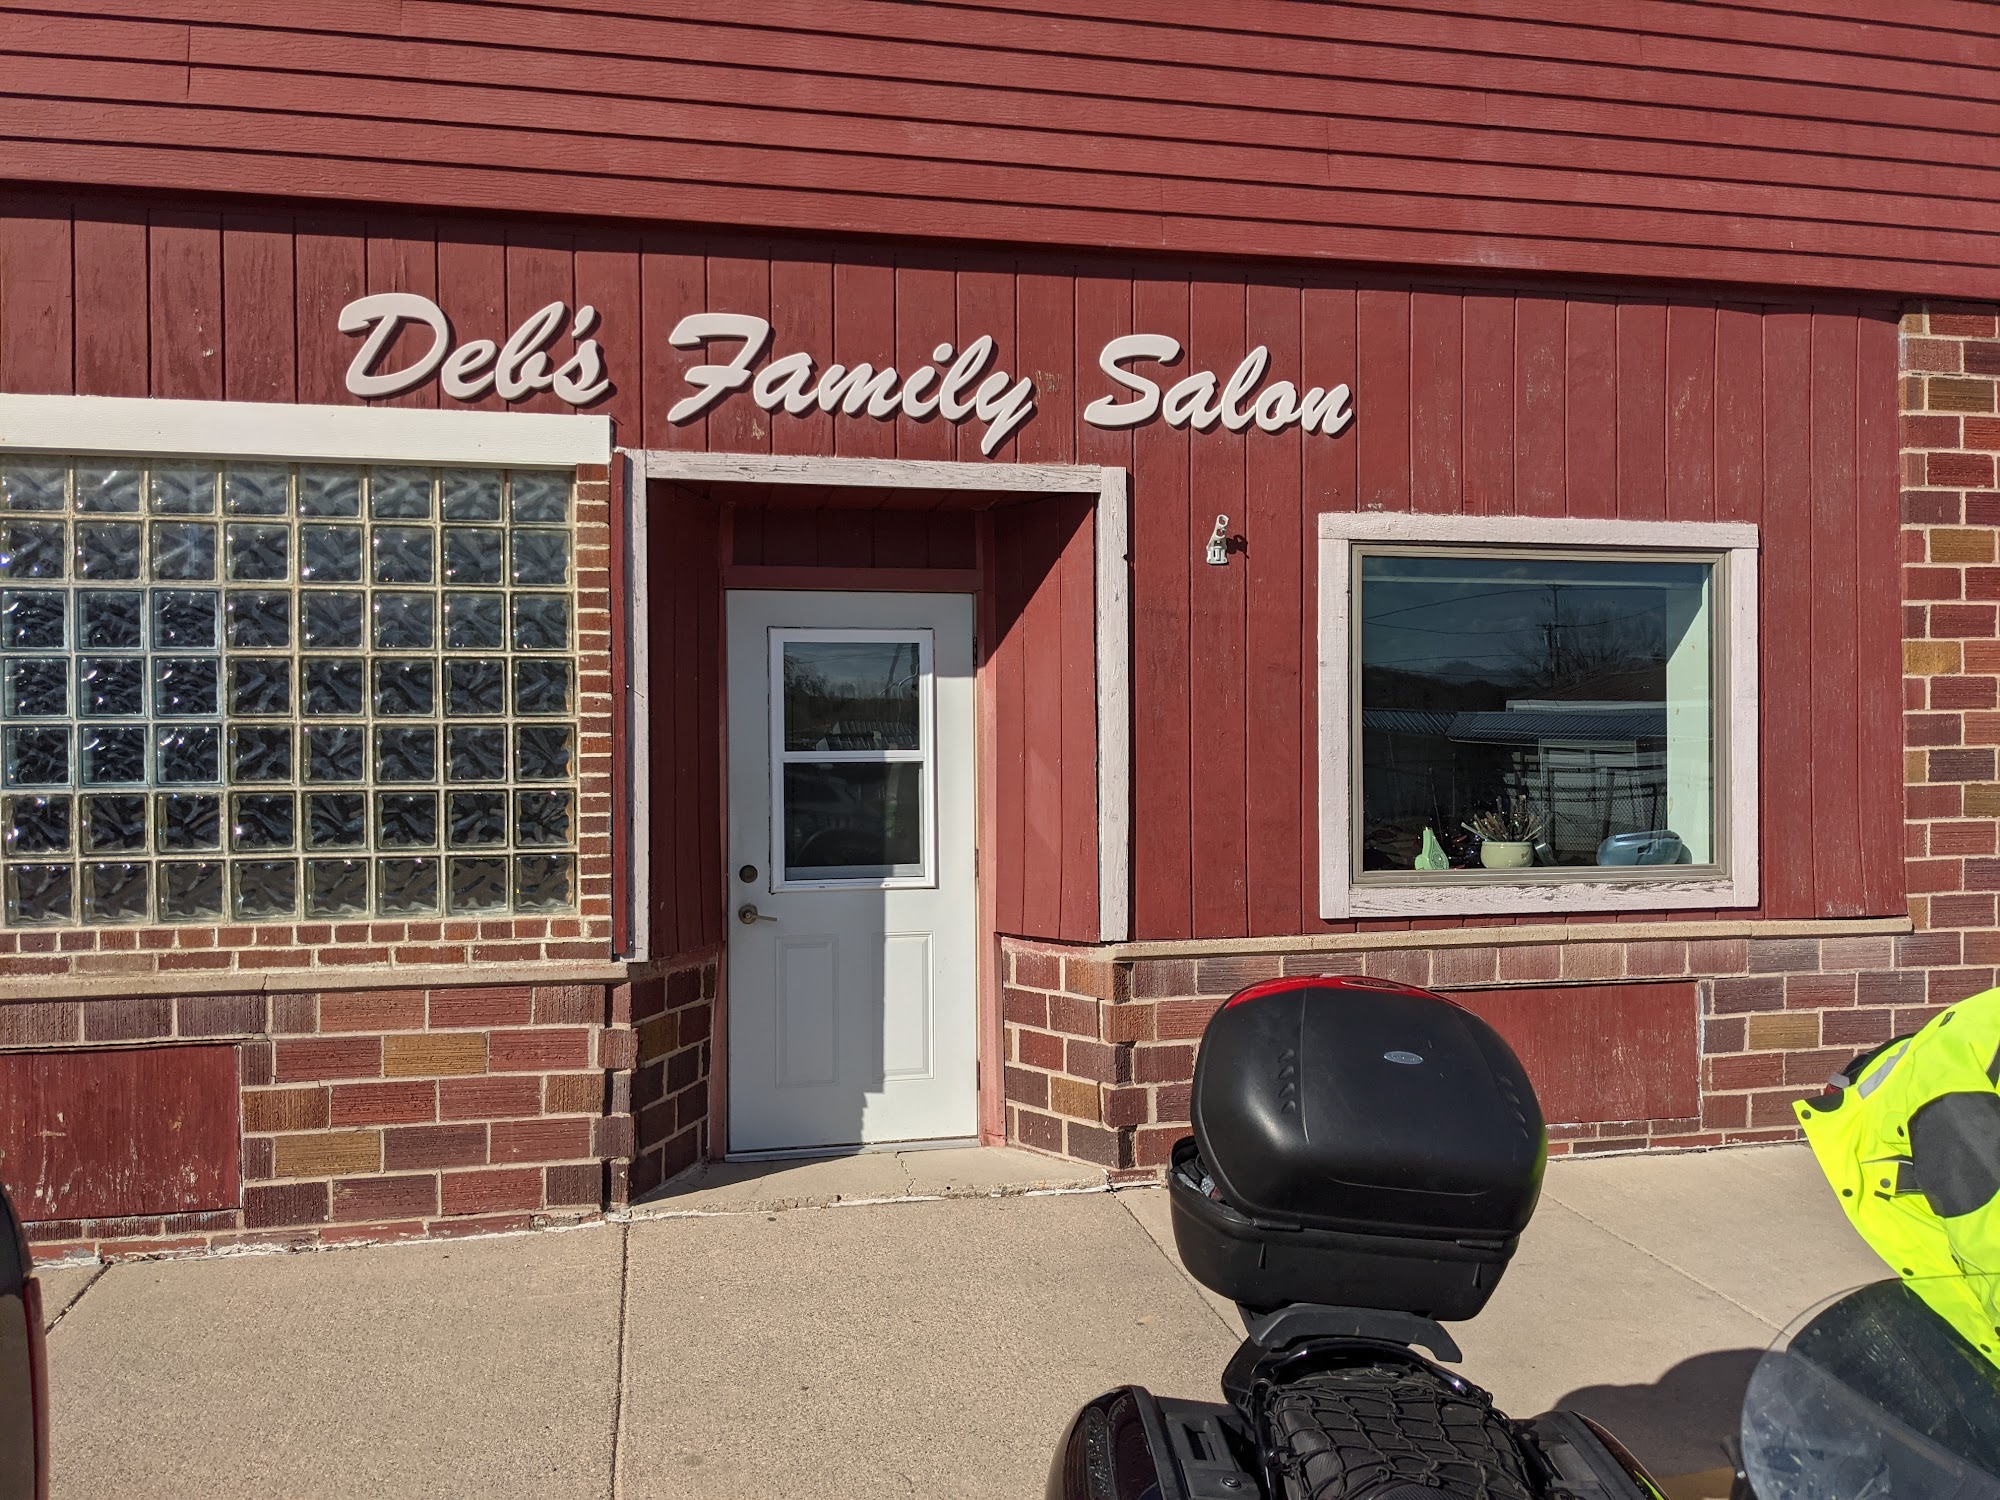 Deb's Family Salon 438 MN-60, Zumbro Falls Minnesota 55991